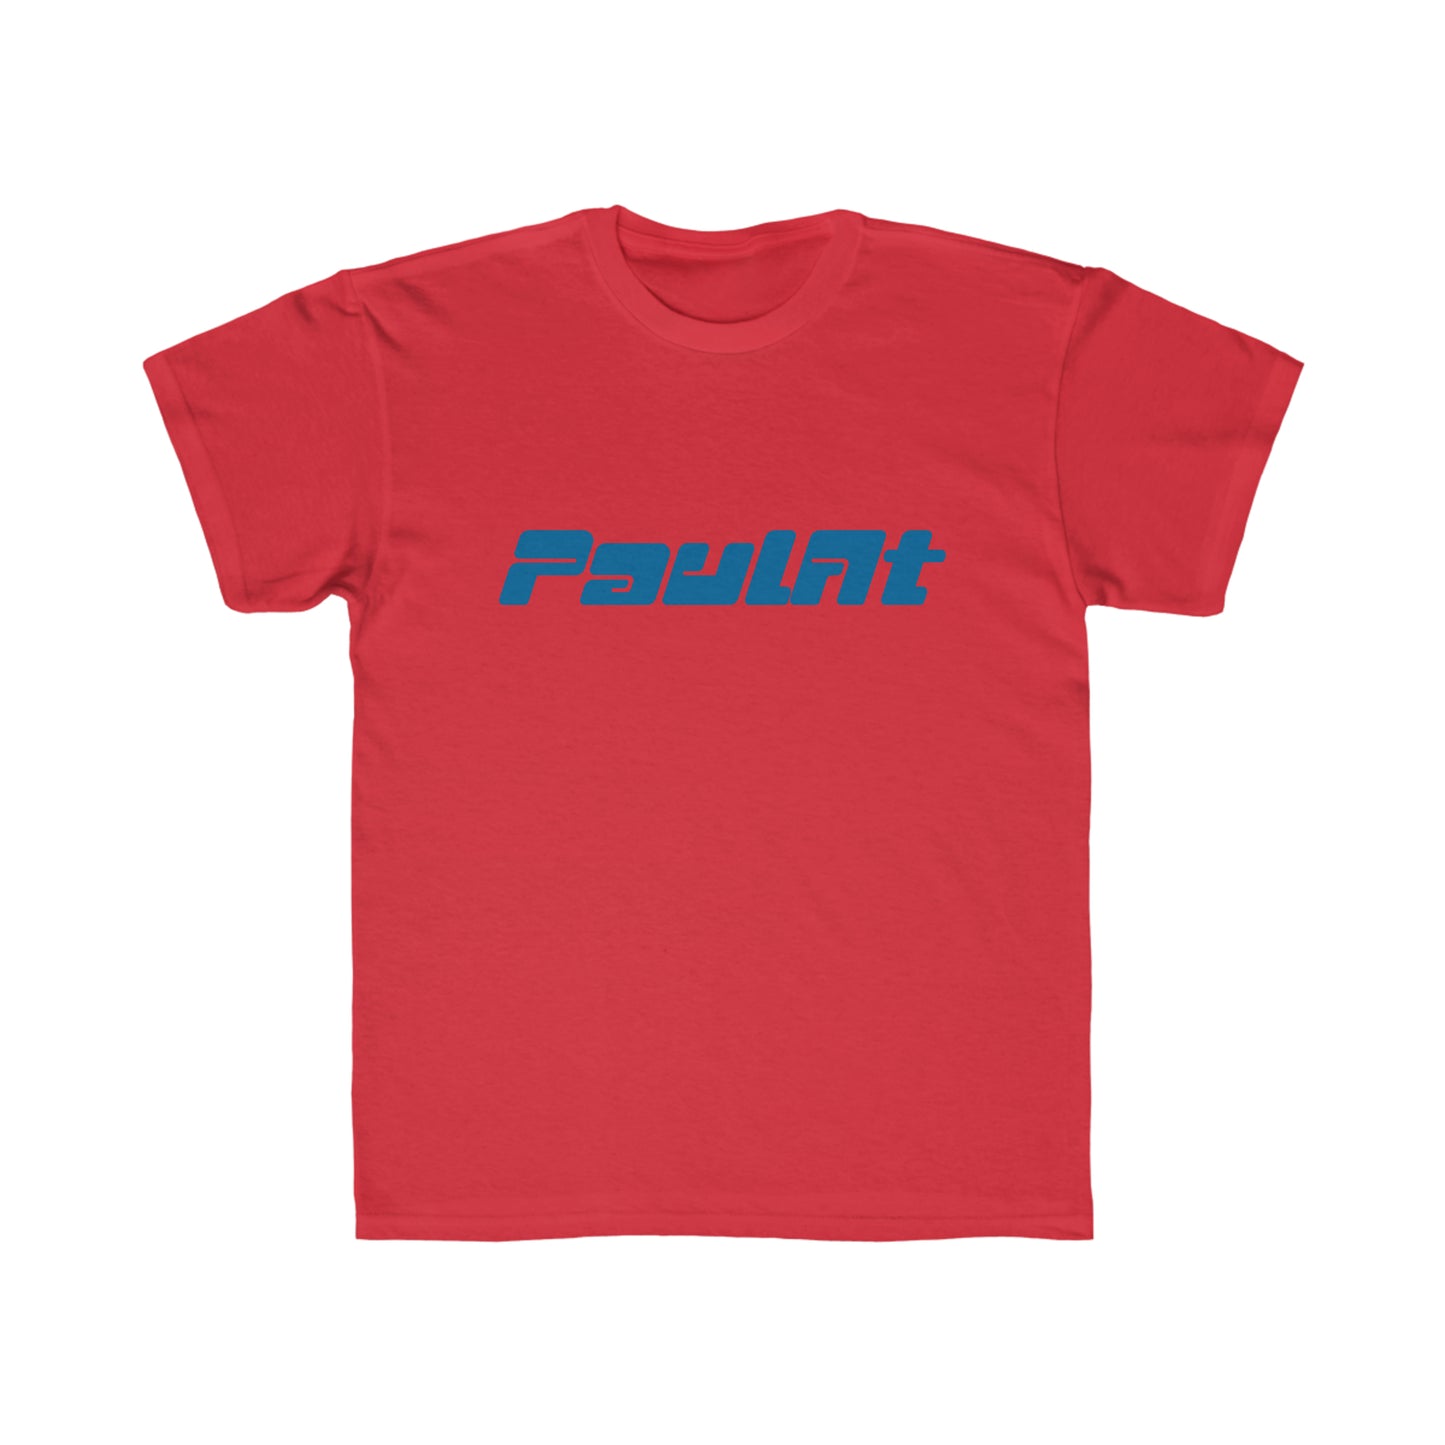 PaulAt Logo Kids T-Shirt